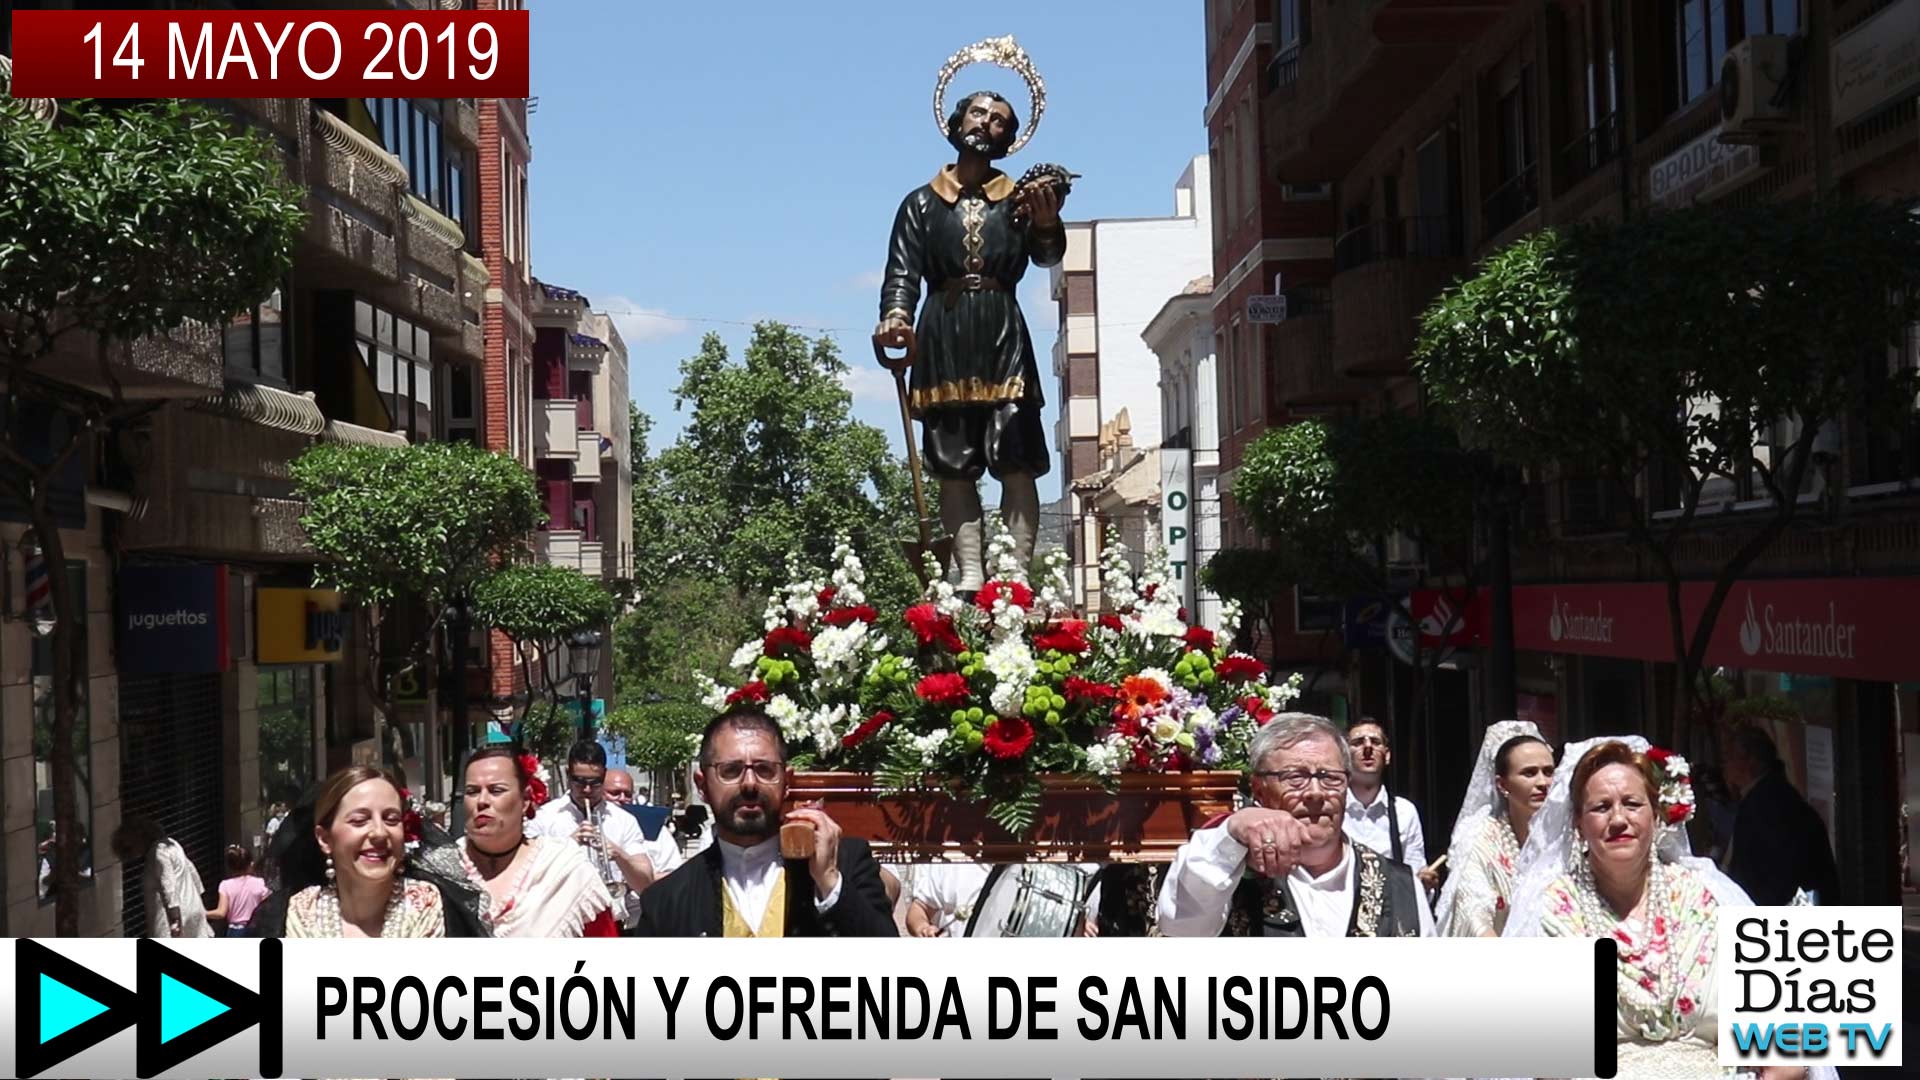 PROCESIÓN OFRENDA SAN ISIDRO - MAYO 2019 - Siete Días Yecla